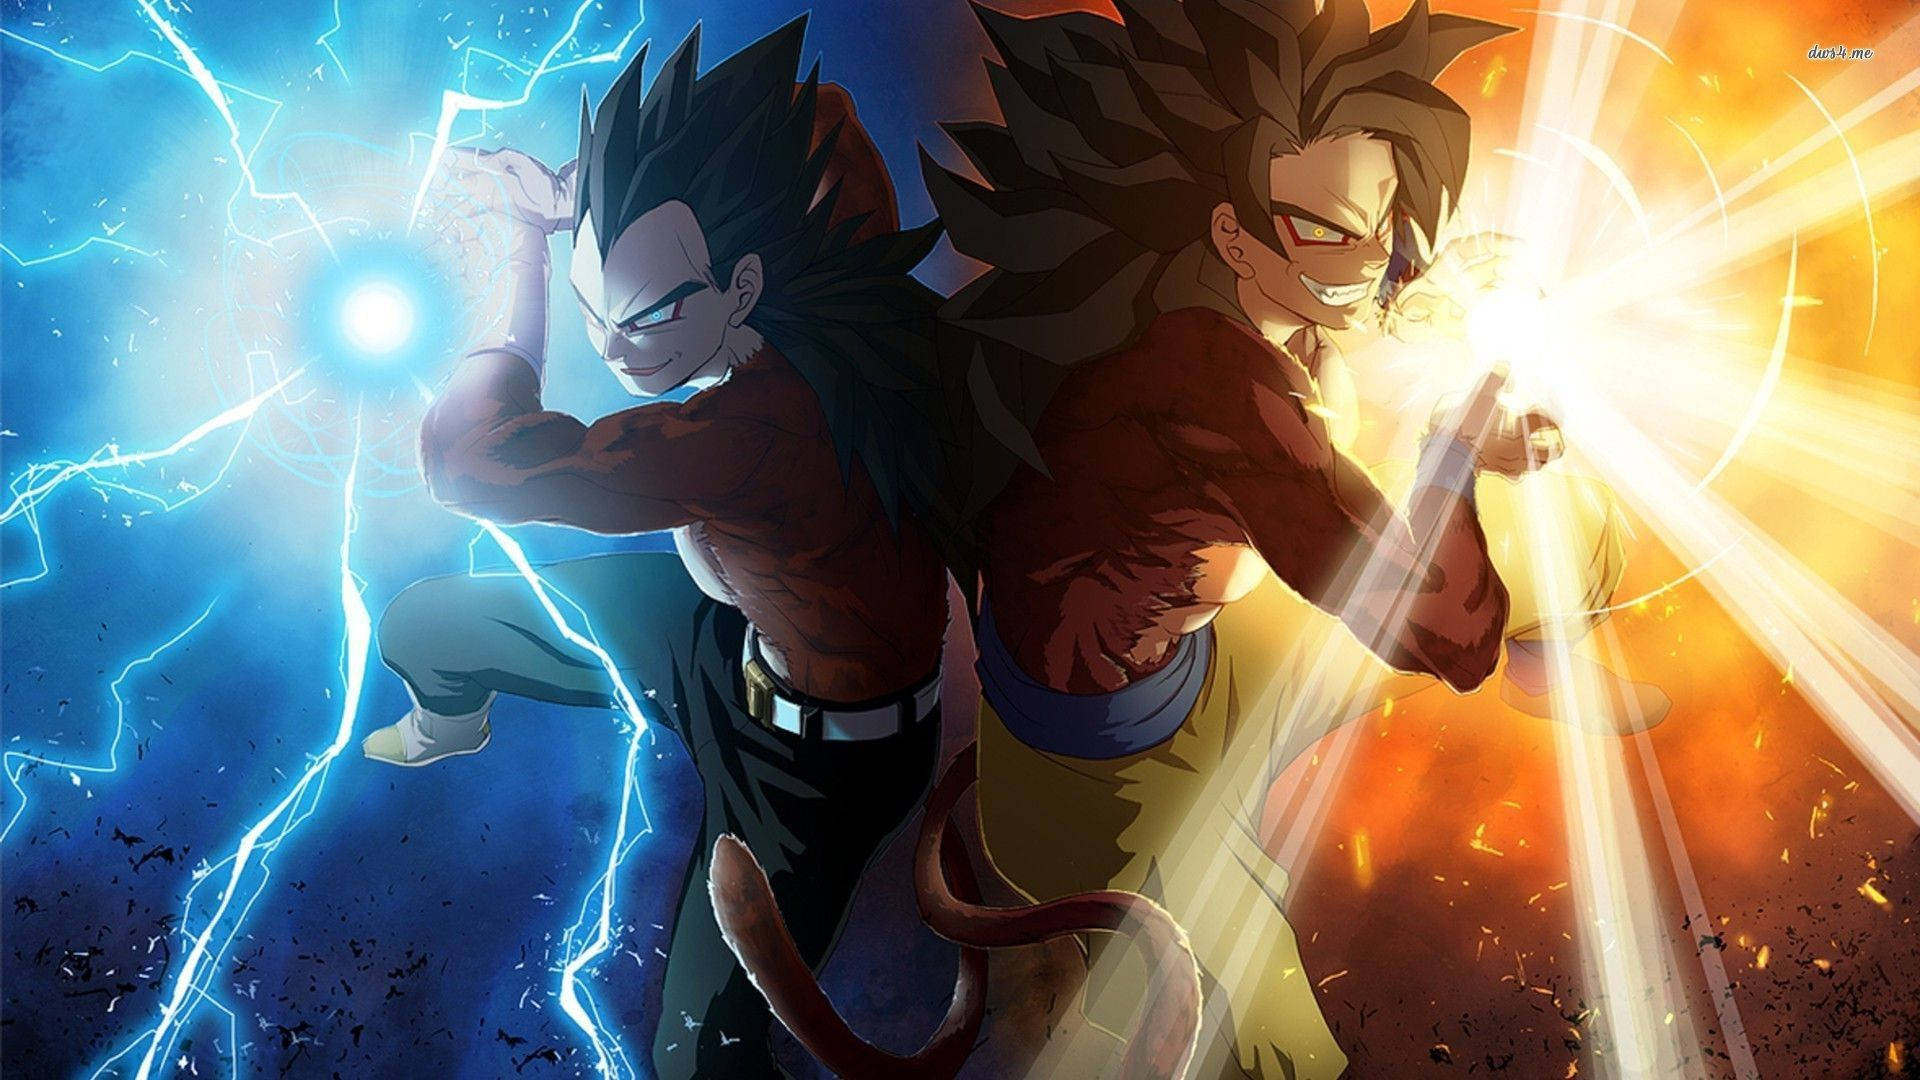 Super Saiyan 4 Powers of Goku & Vegeta Wallpaper